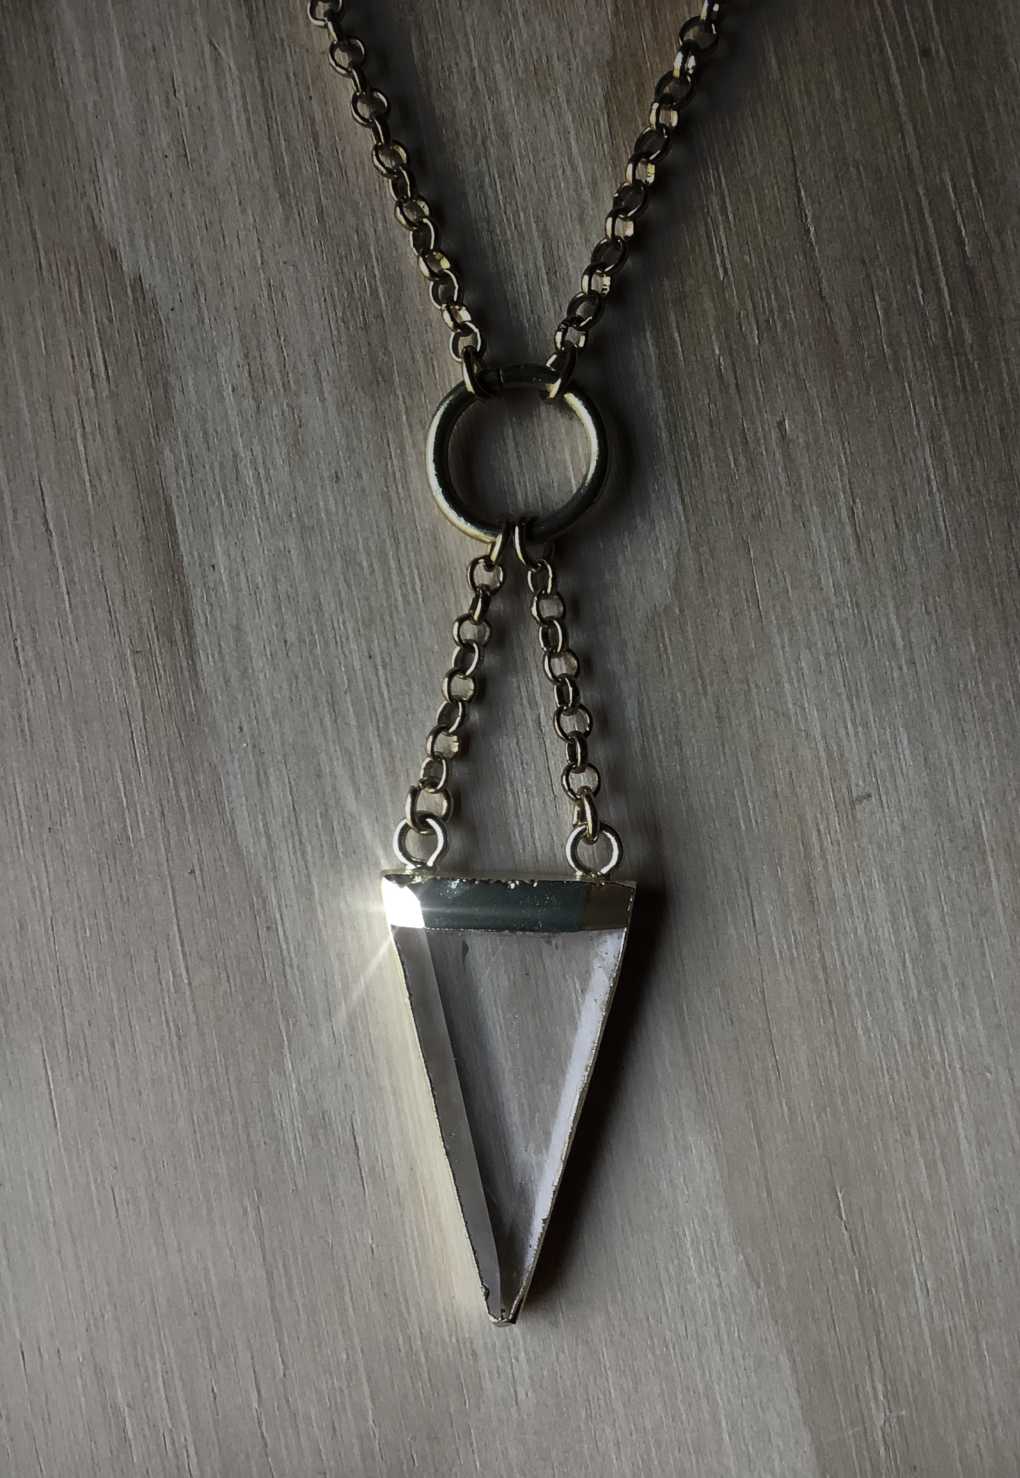 Sterling Silver Crystal Chip Necklaces - Adjustable Length!